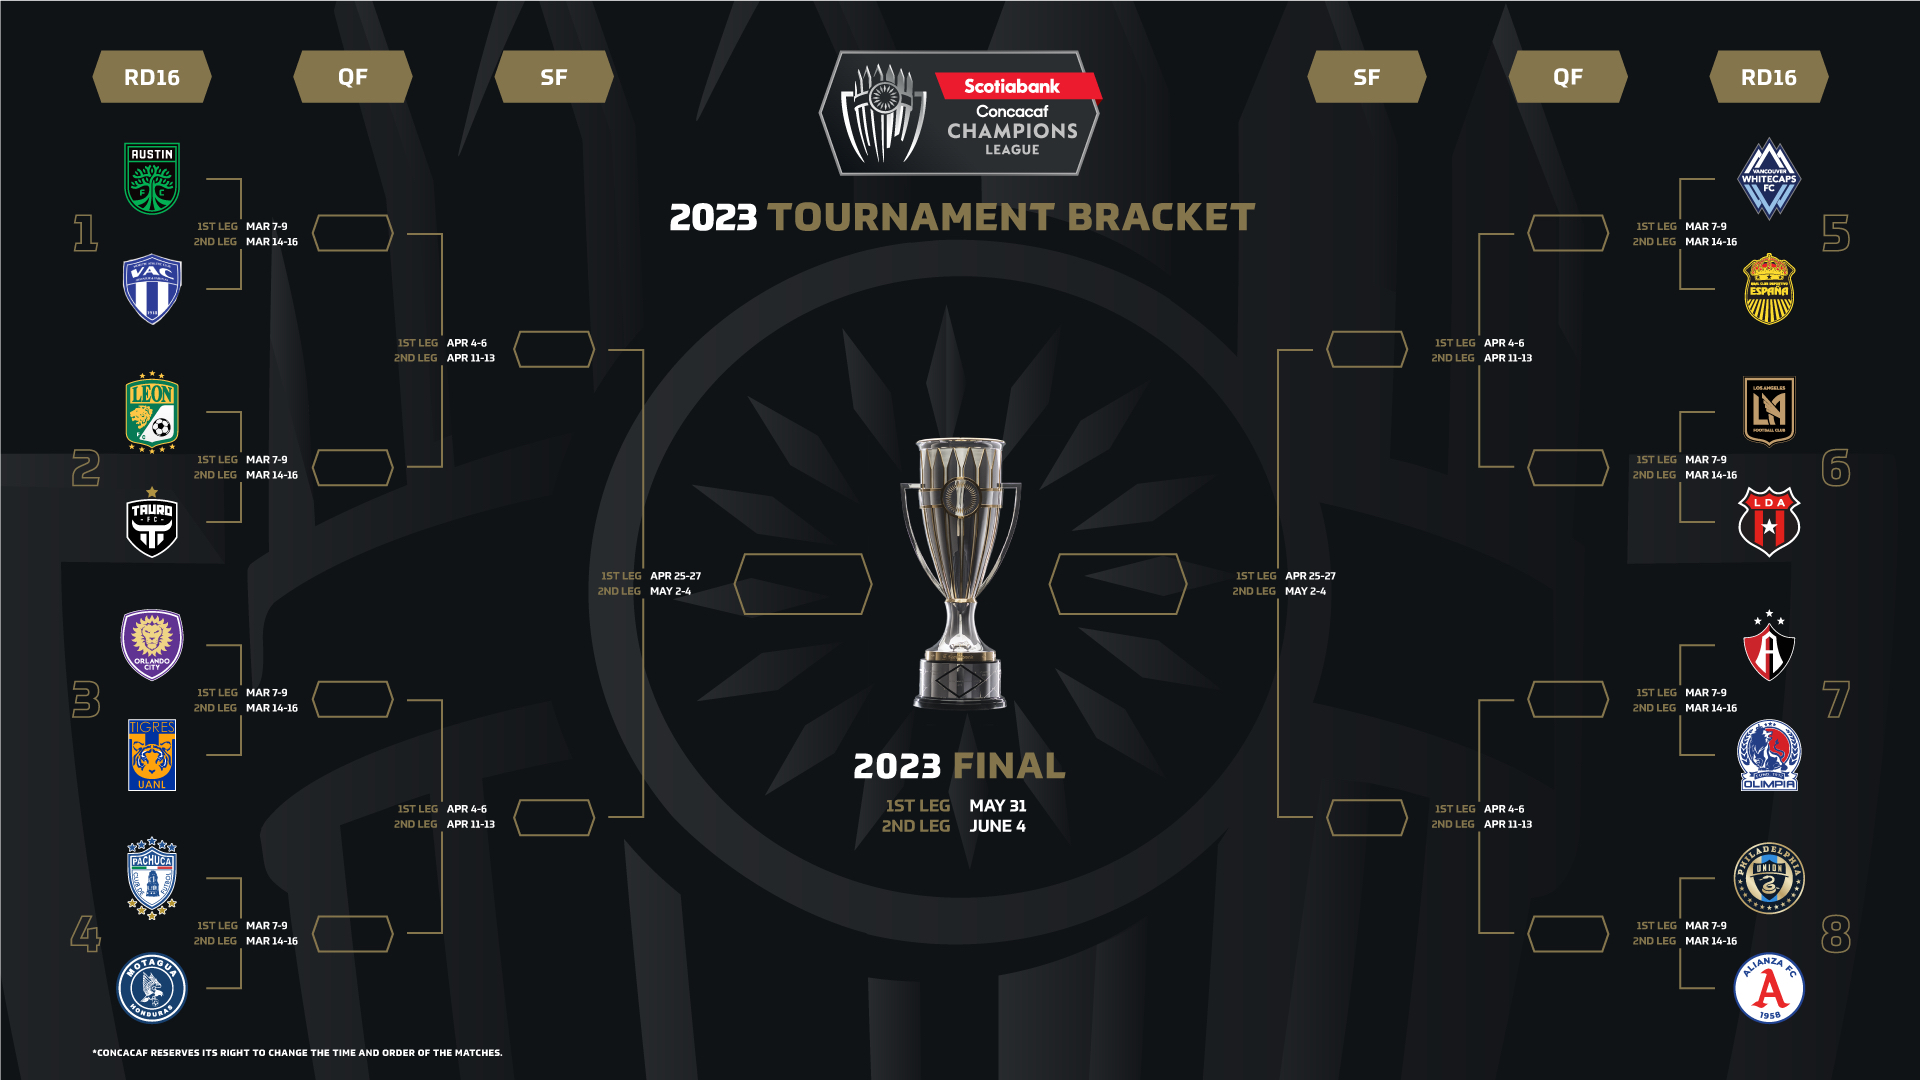 Radial Bracket] 2023 Leagues Cup Round of 16 is set. : r/MLS